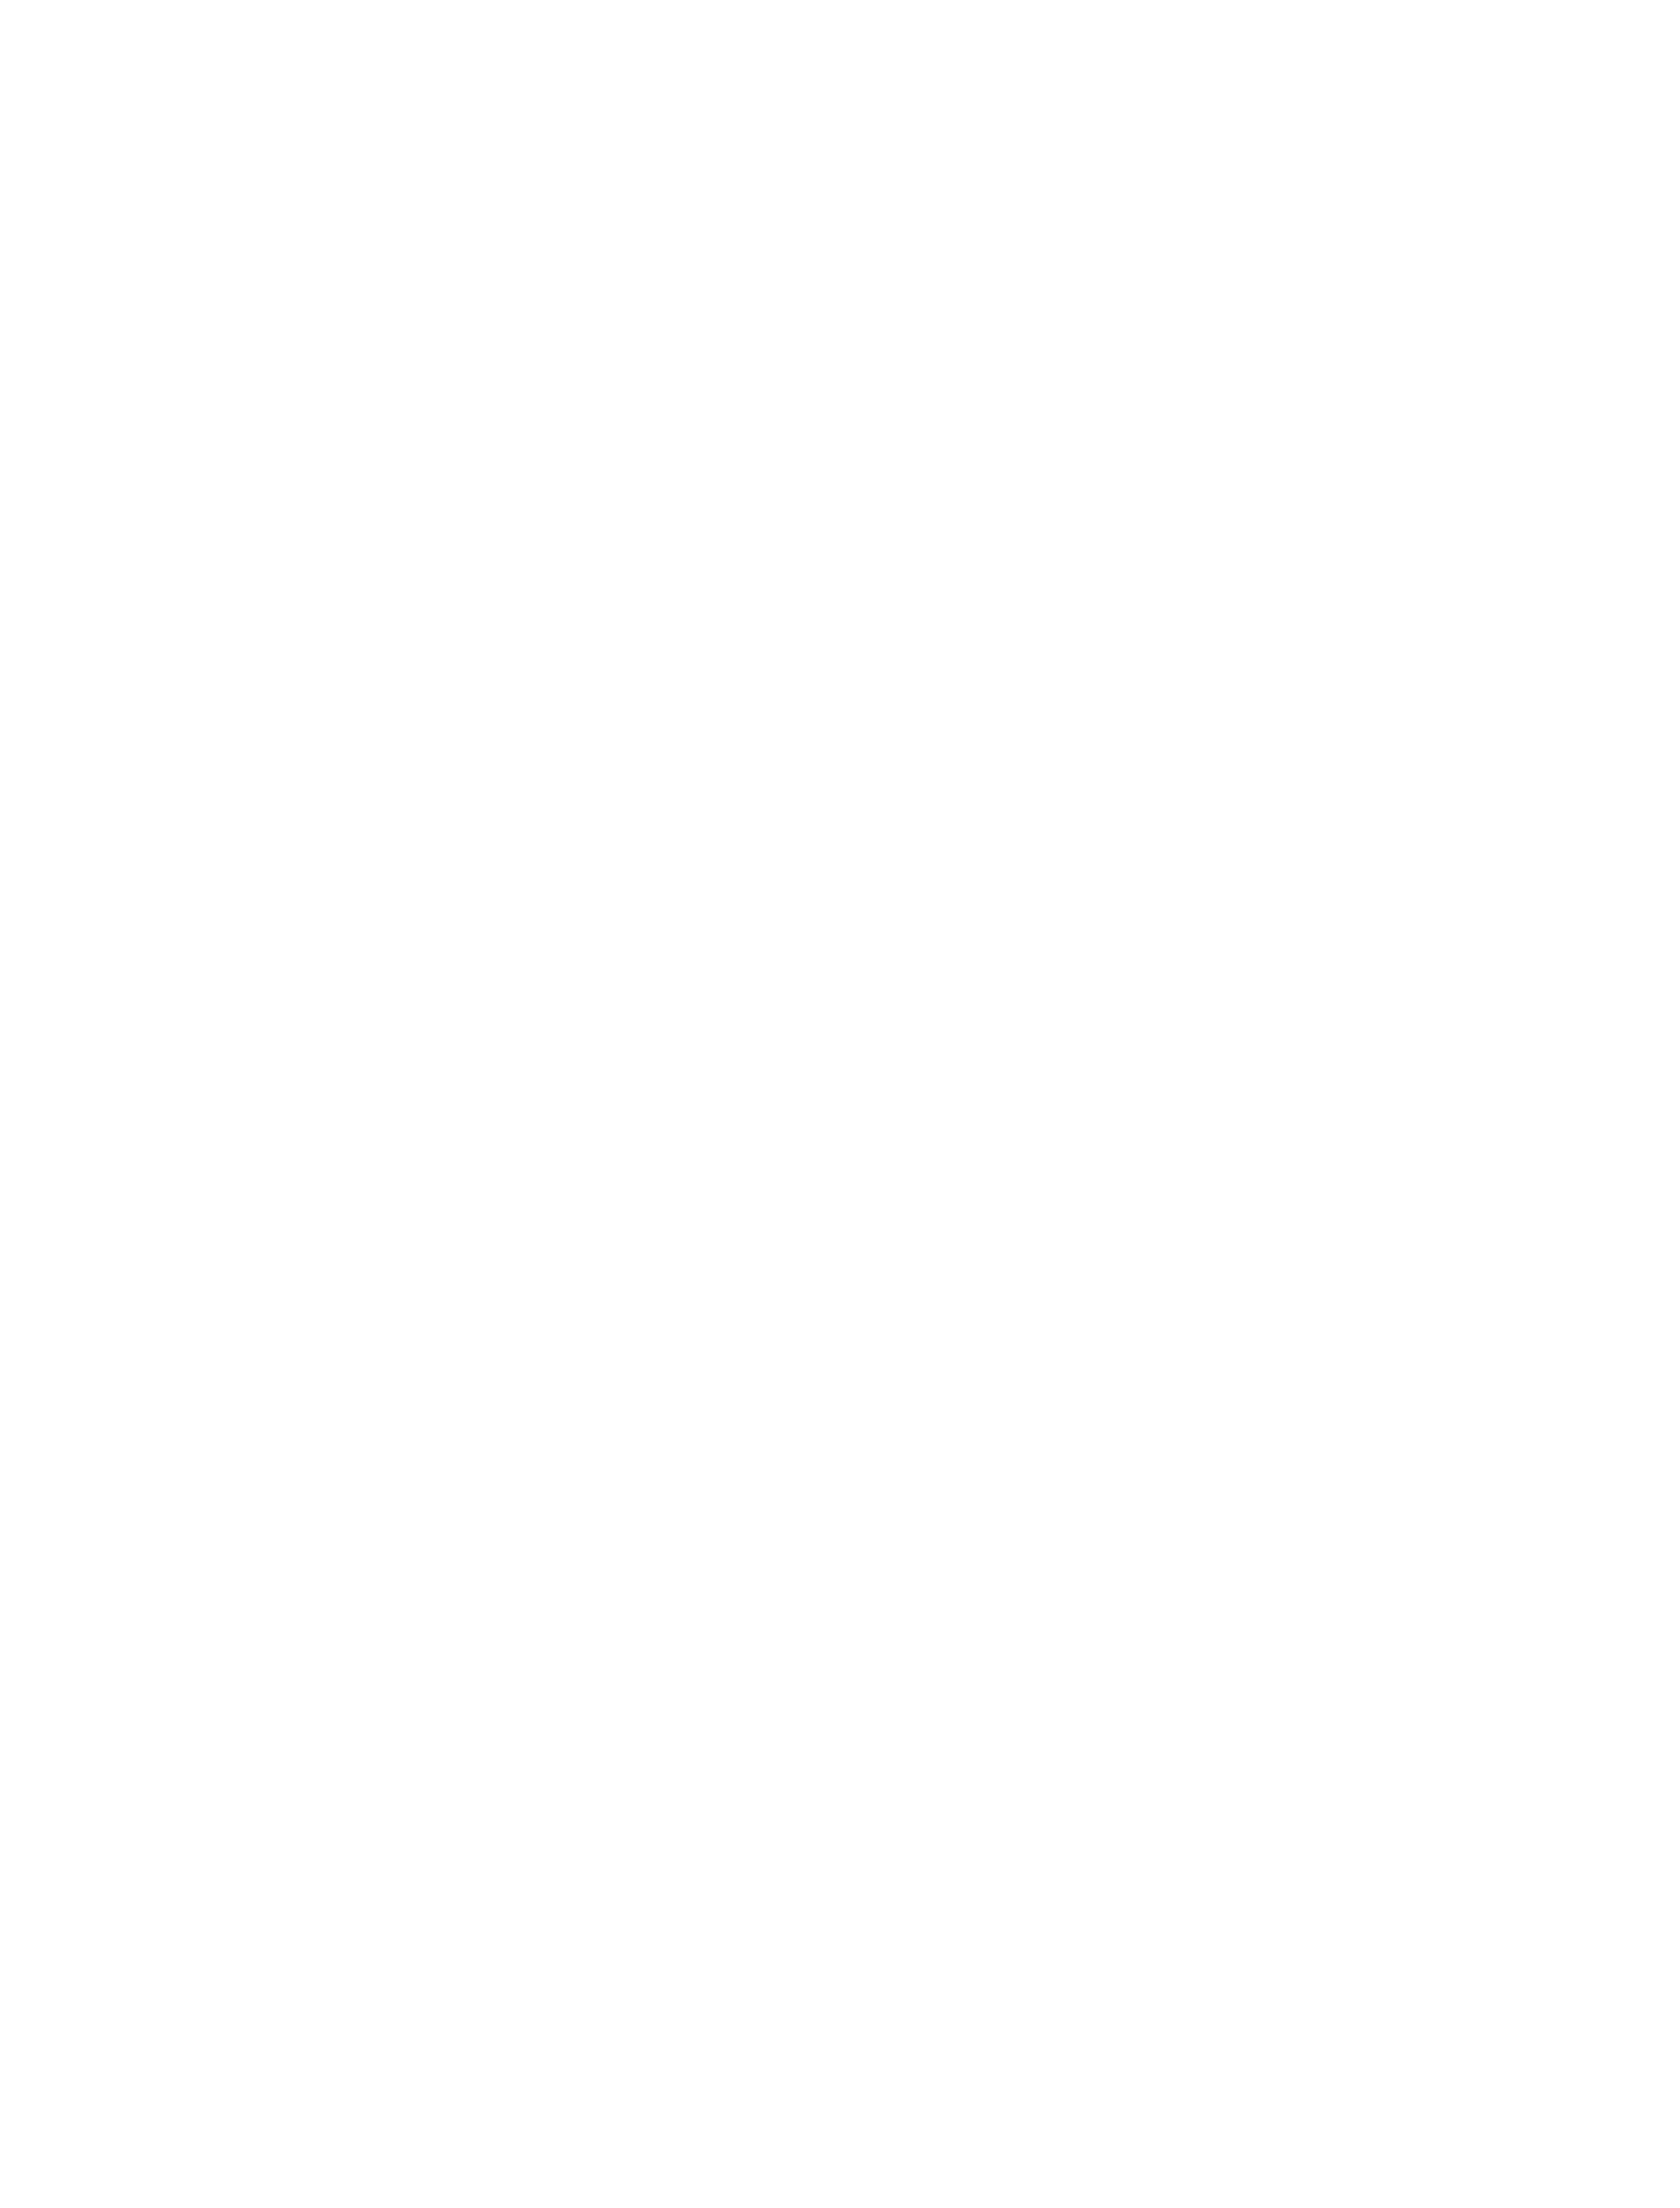 ResourceRoyalty-Logo-Drop-Standalone-AllwhiteAsset 15Small